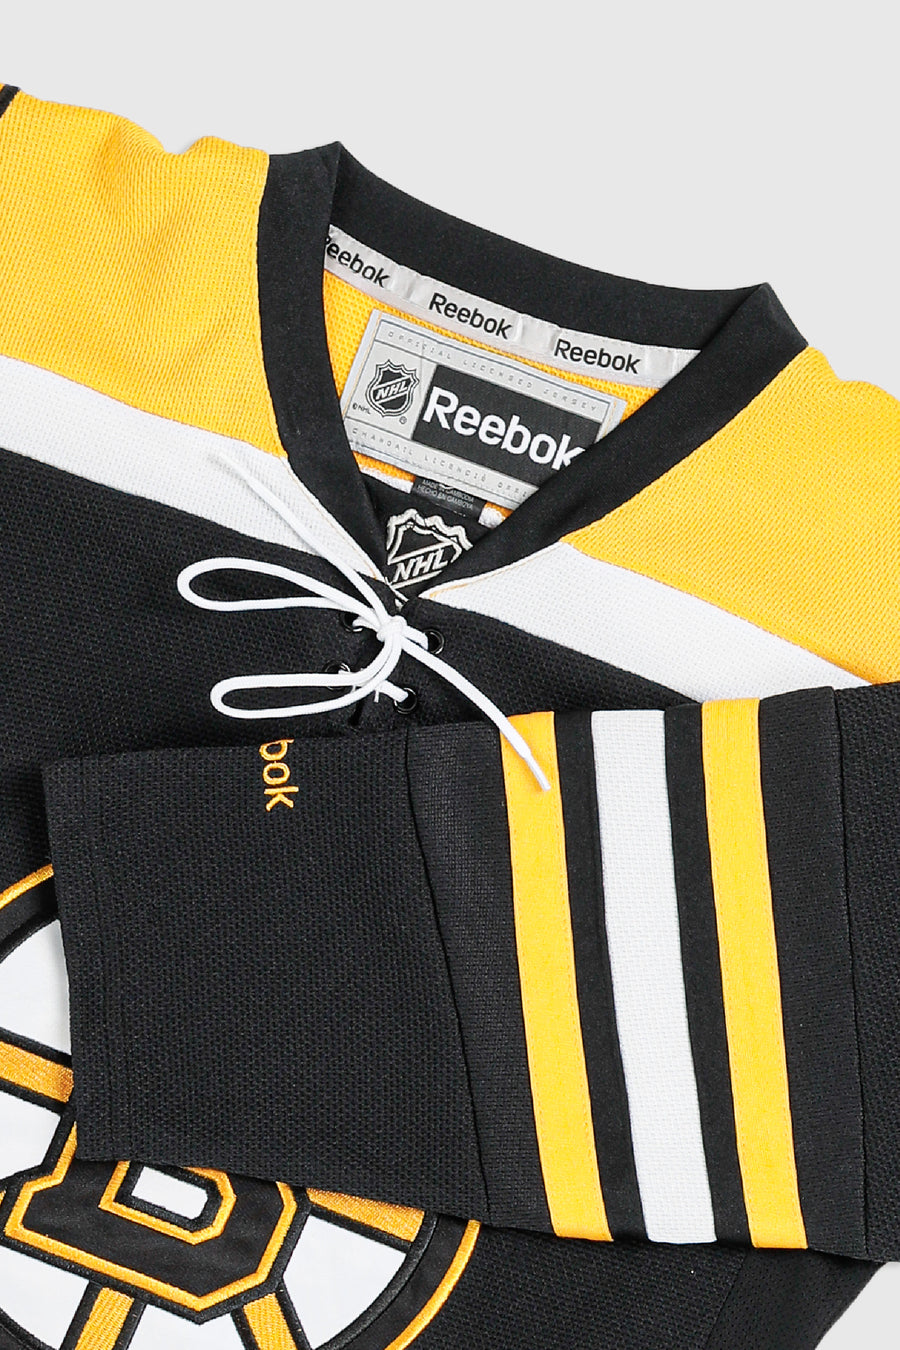 Vintage Bruins NHL Jersey - Women's XS